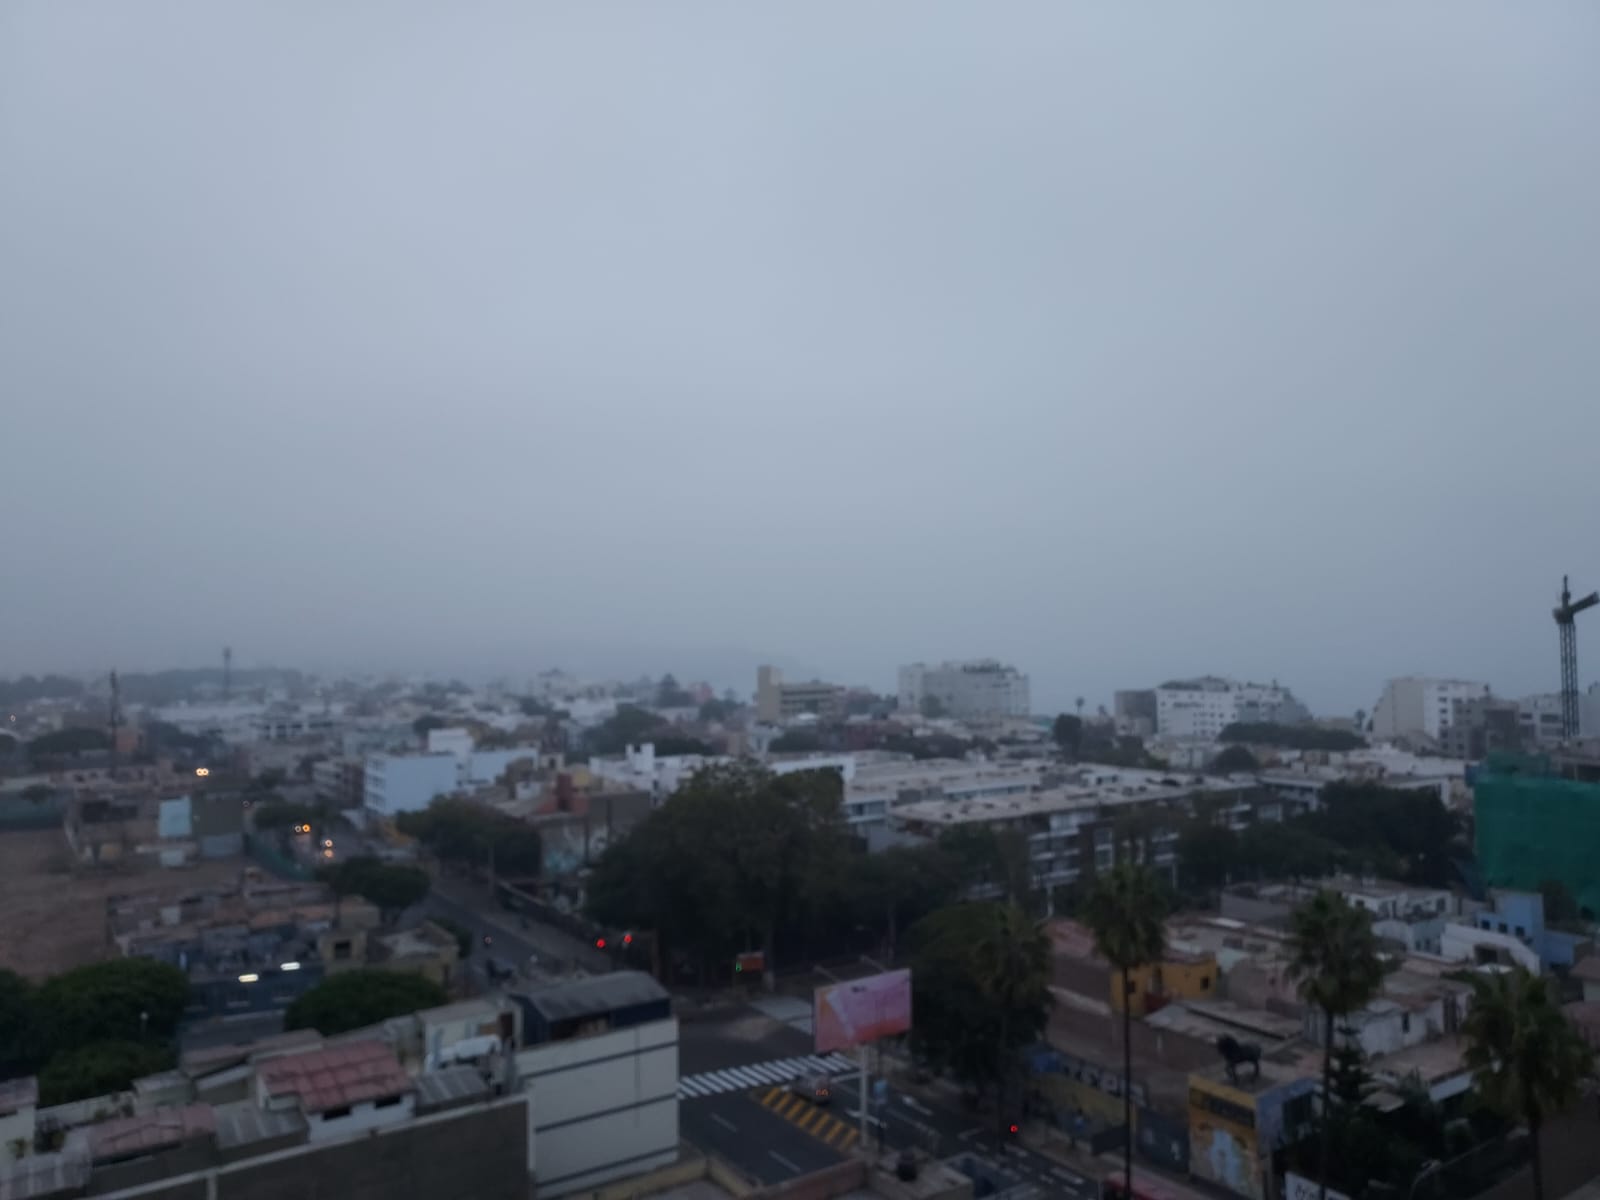 Senamhi: Lima registró temperatura más baja del año